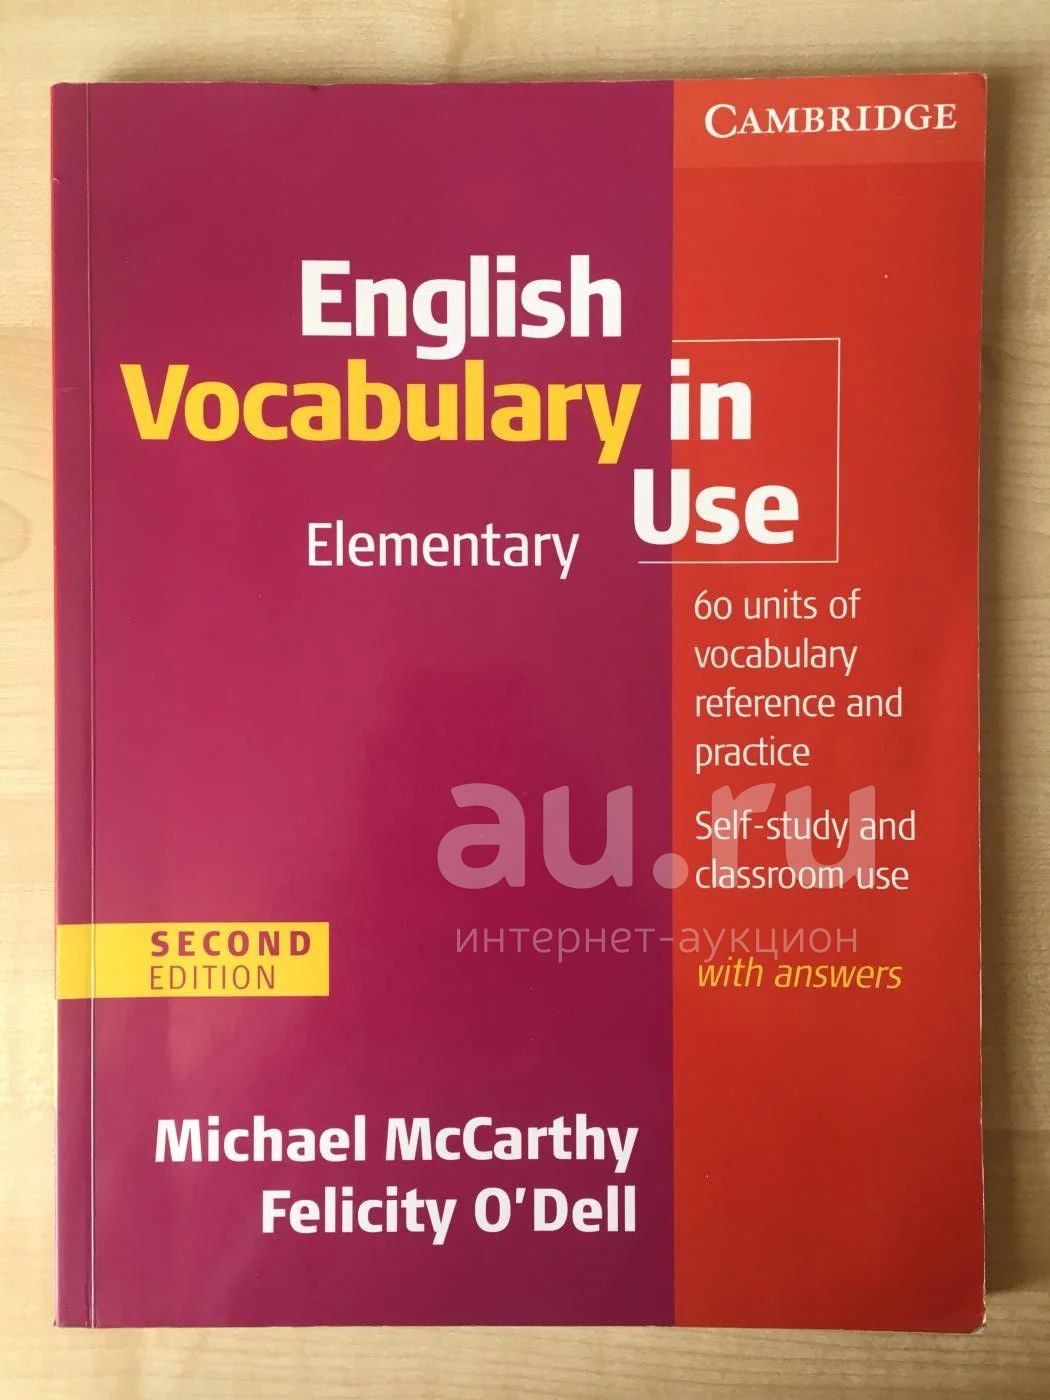 Test english vocabulary in use. English Vocabulary in use книга. English in use Elementary. English Vocabulary in use Elementary. Murphy English Vocabulary in use.